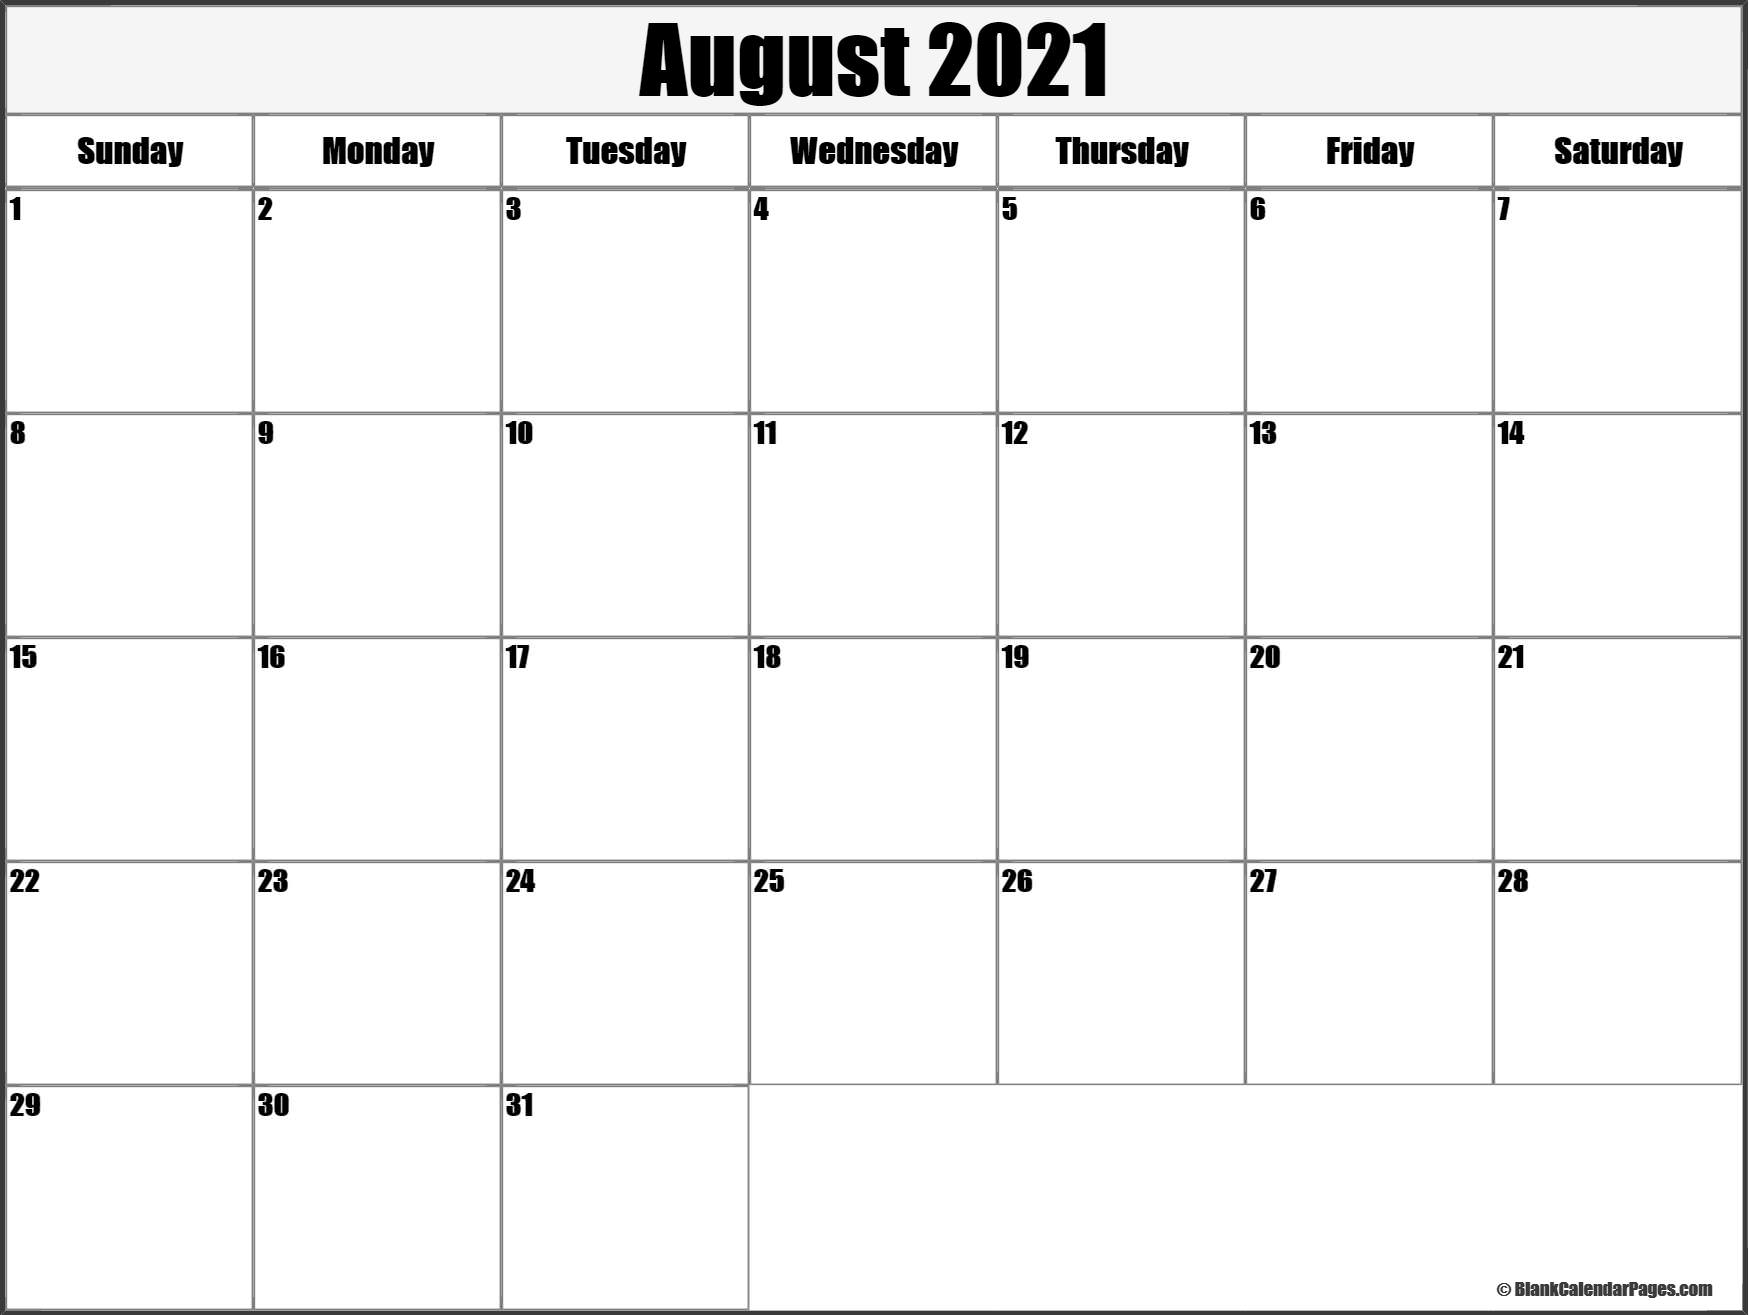 August 2021 Blank Calendar Templates.